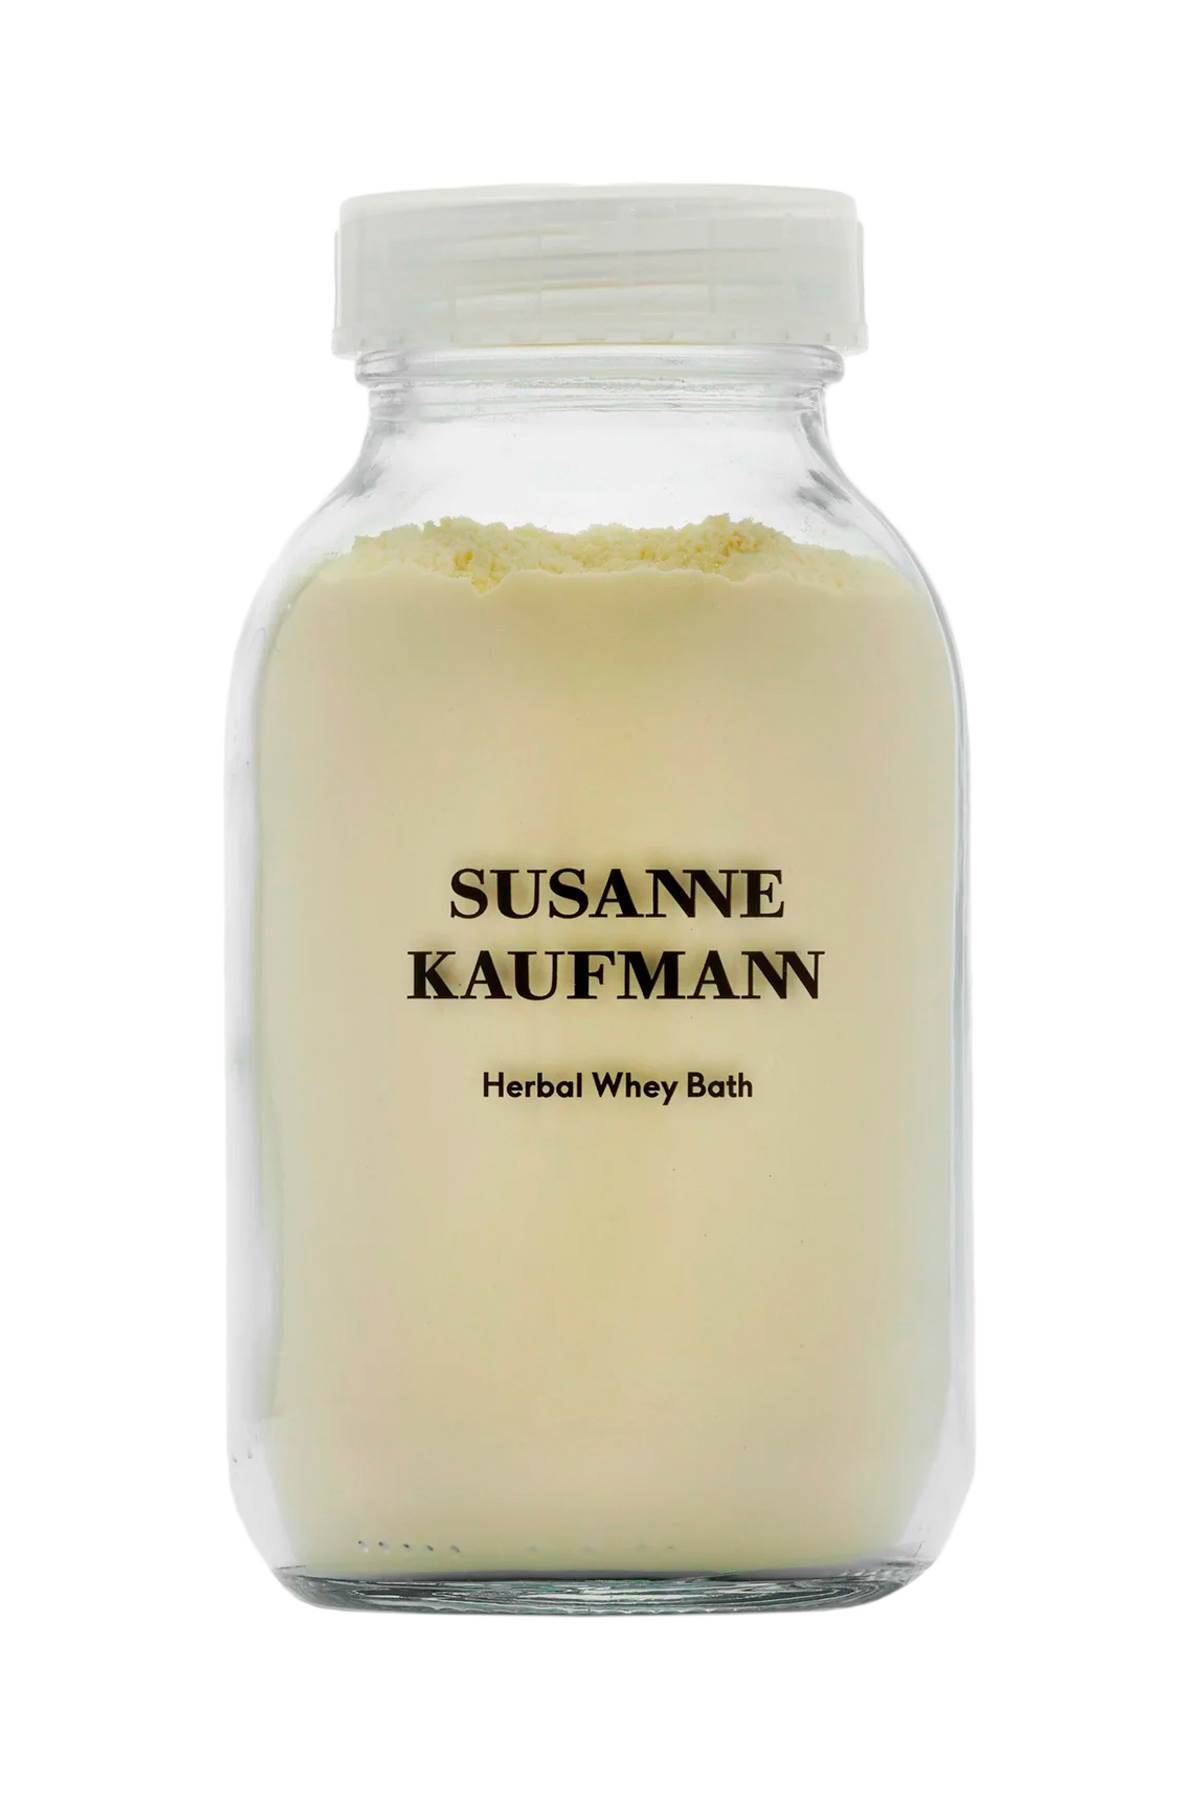 Susanne Kaufmann SUSANNE KAUFMANN herbal whey bath - 330 g